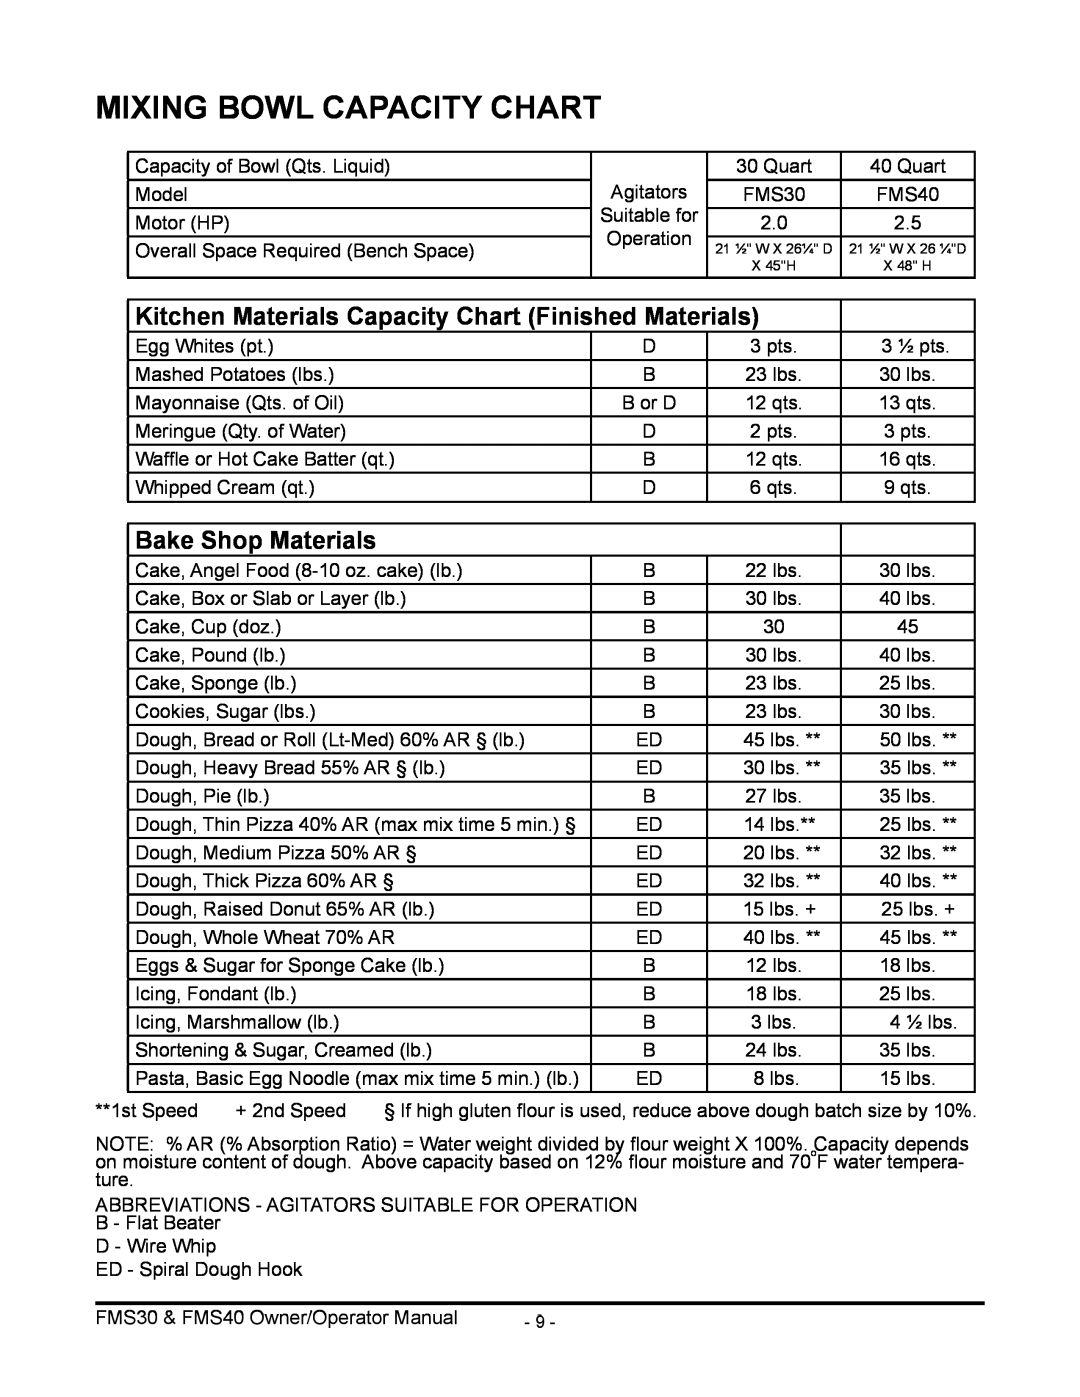 Berkel FMS40 manual Mixing Bowl Capacity Chart, Bake Shop Materials 